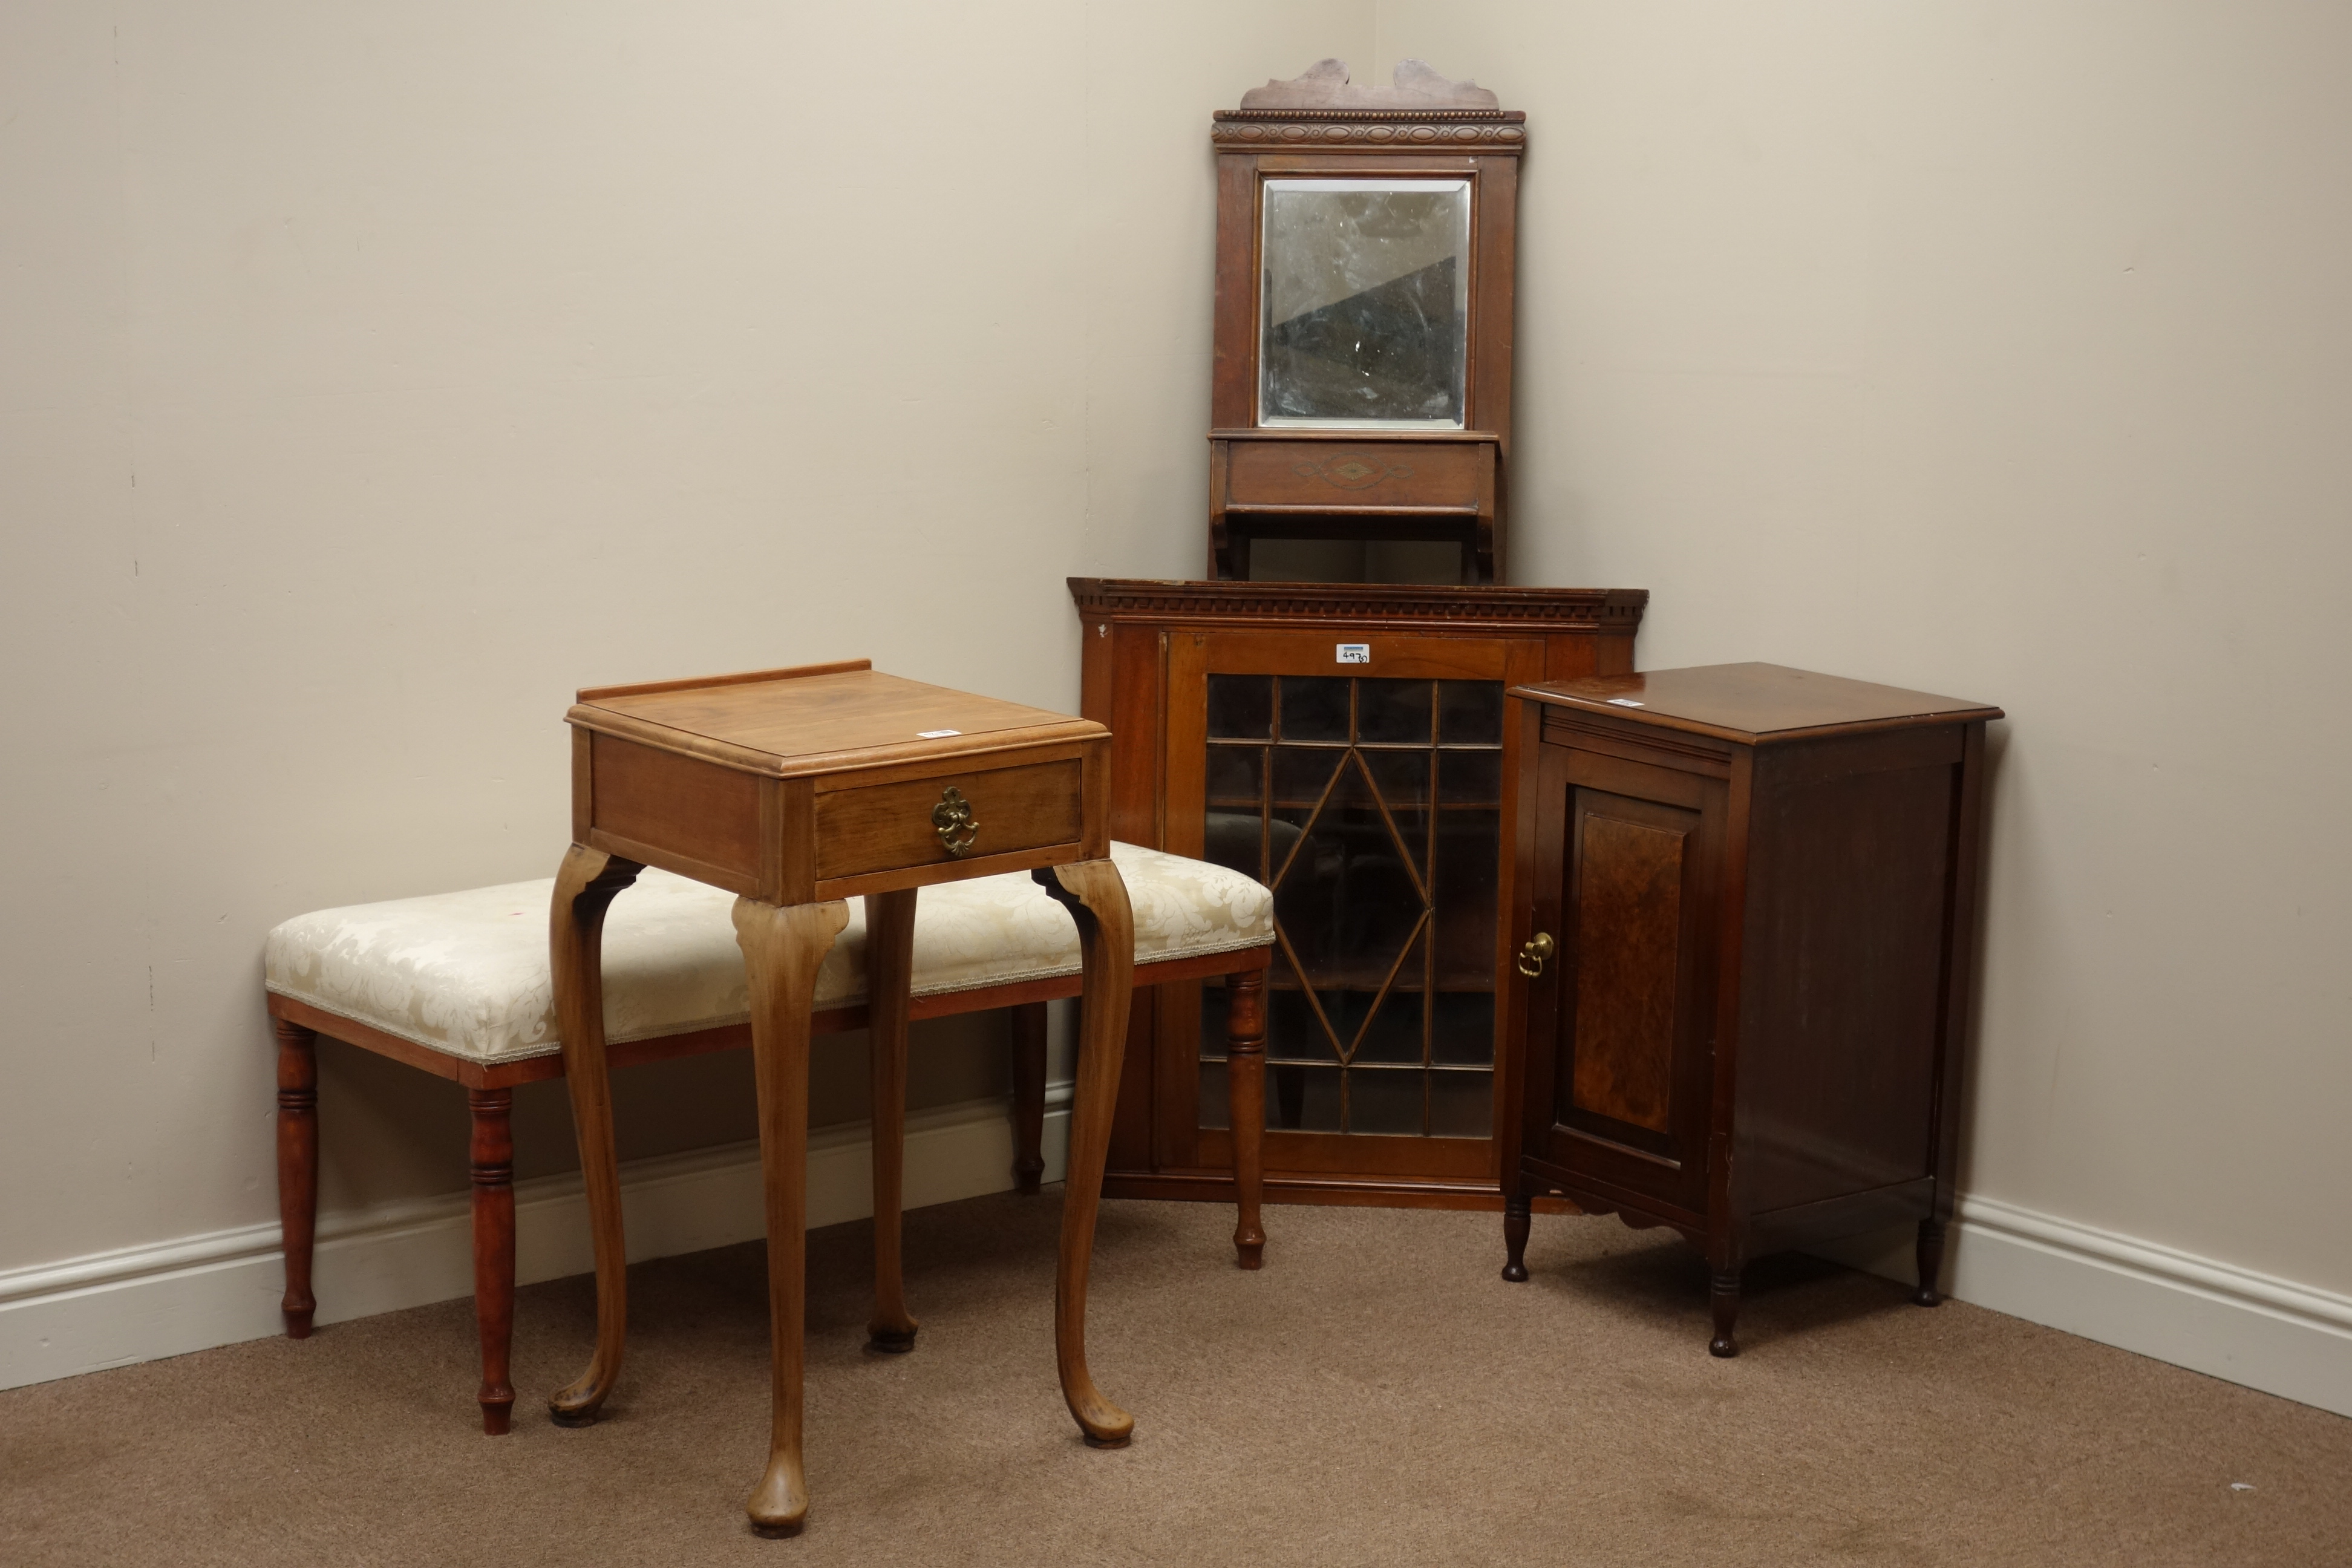 Edwardian walnut bedside cabinet, mahogany corner cabinet, lamp table with drawer,